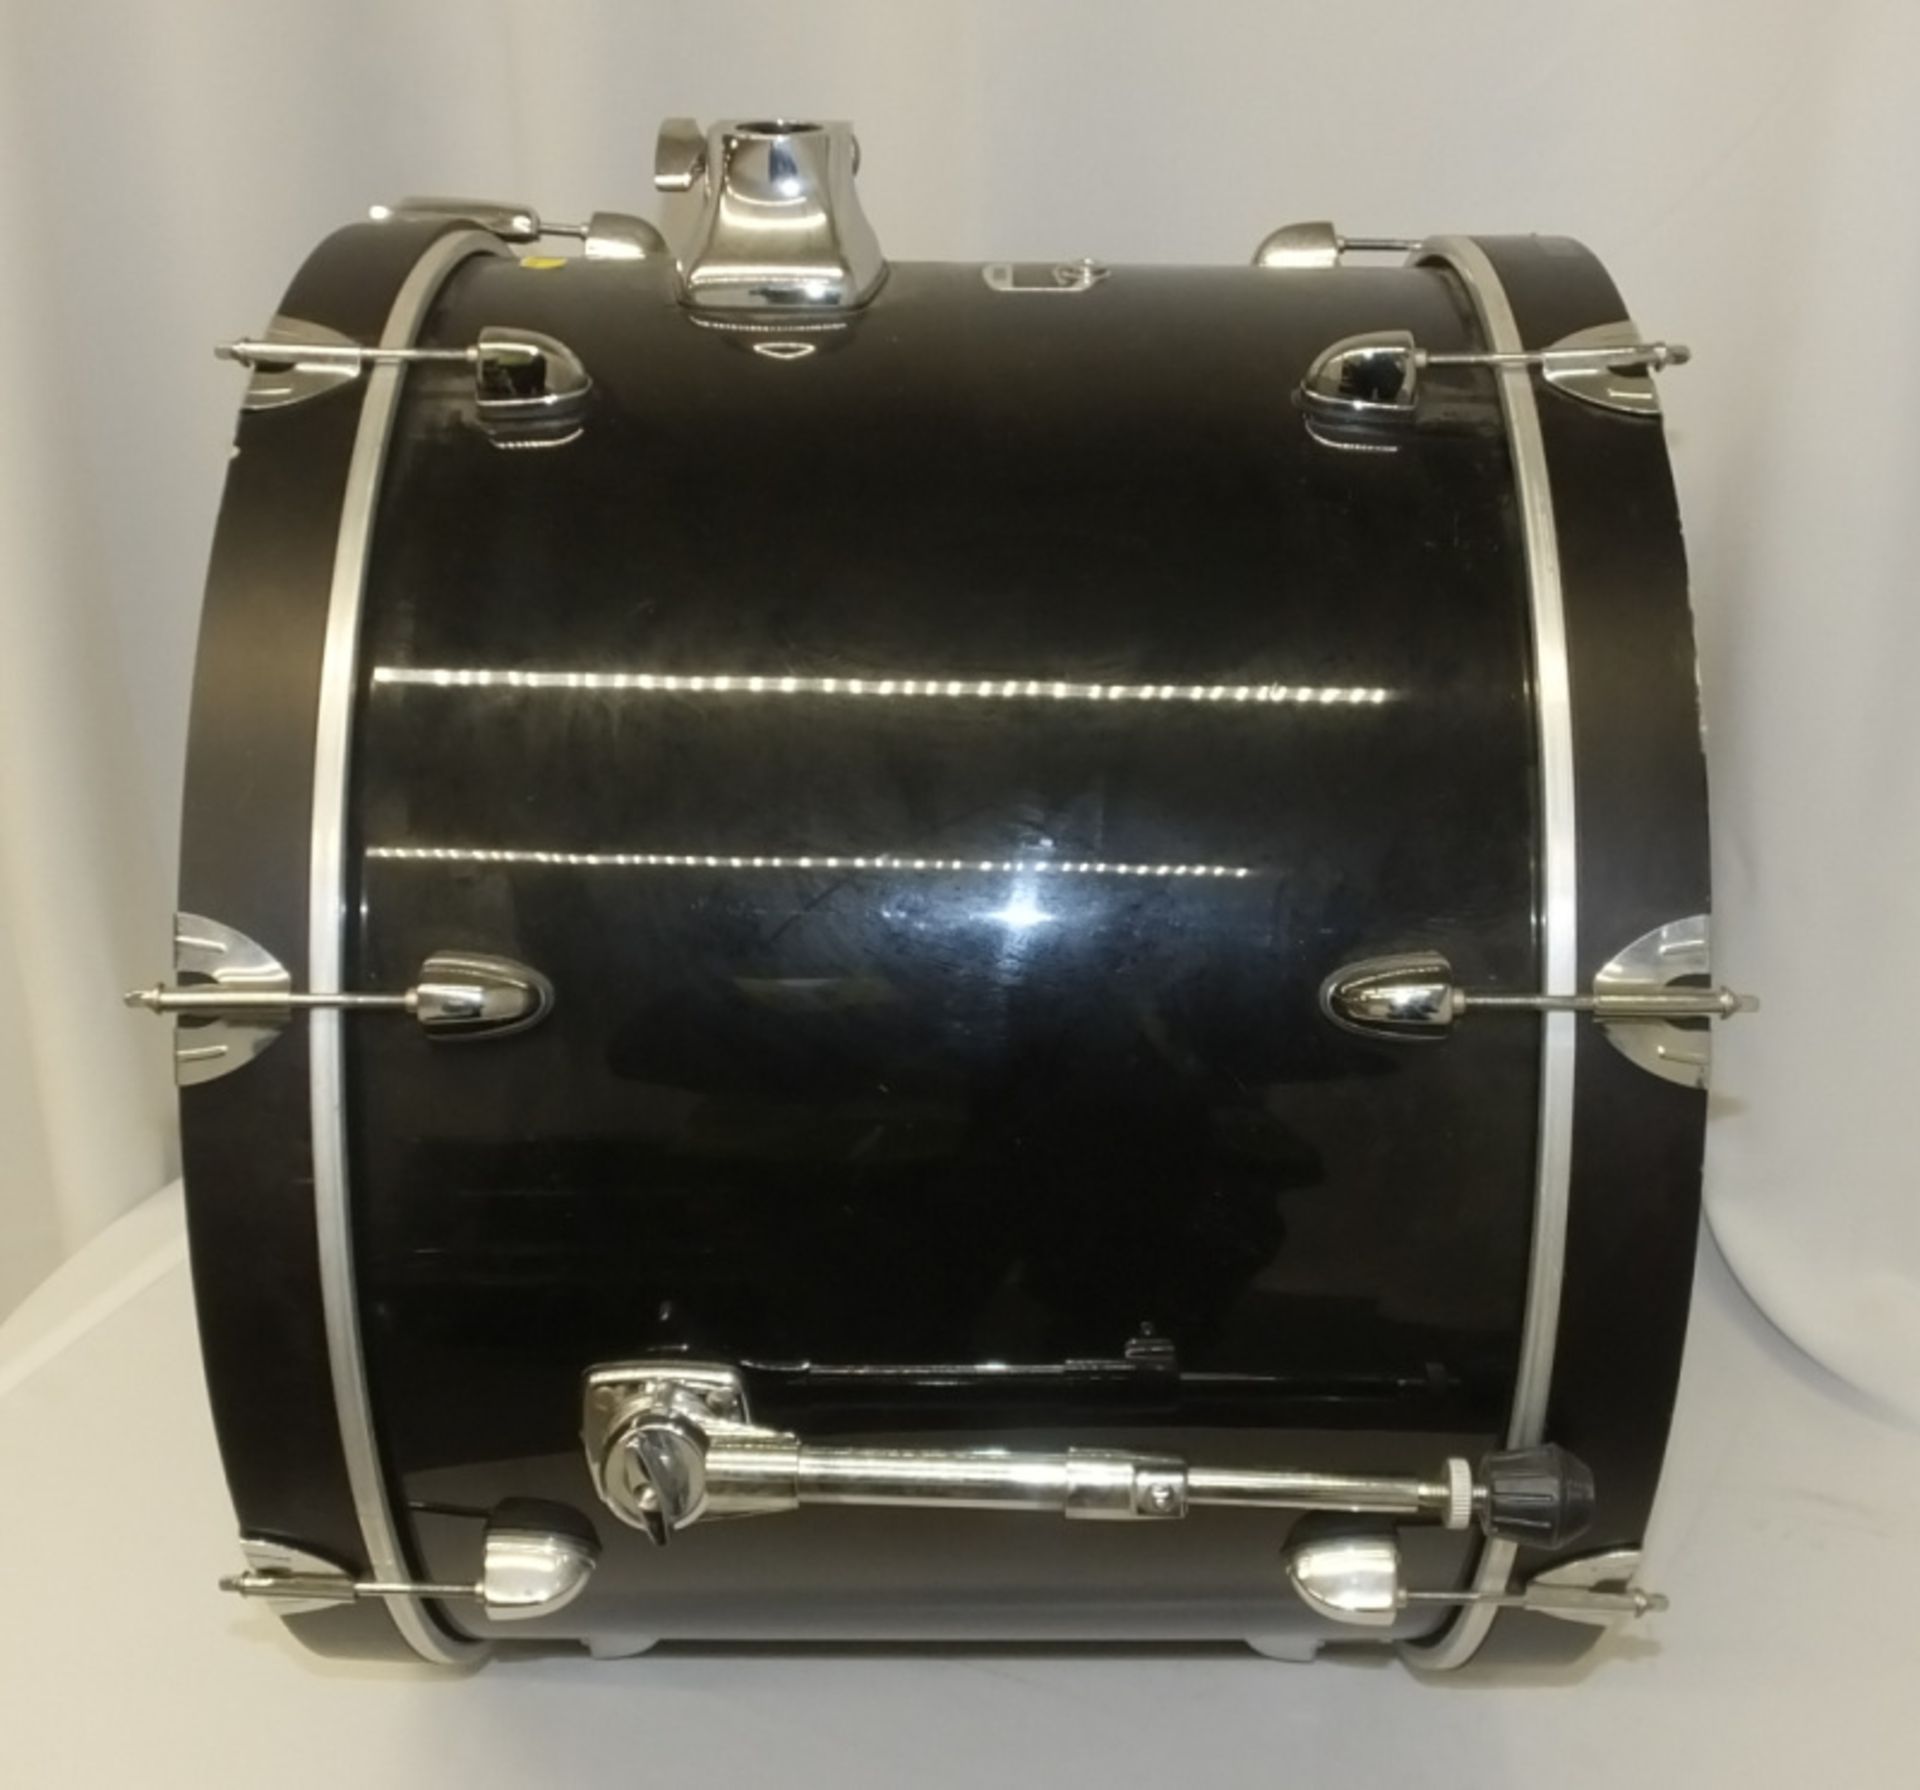 Yamaha Gigmaker Drum Kit - details in the description - Image 6 of 31